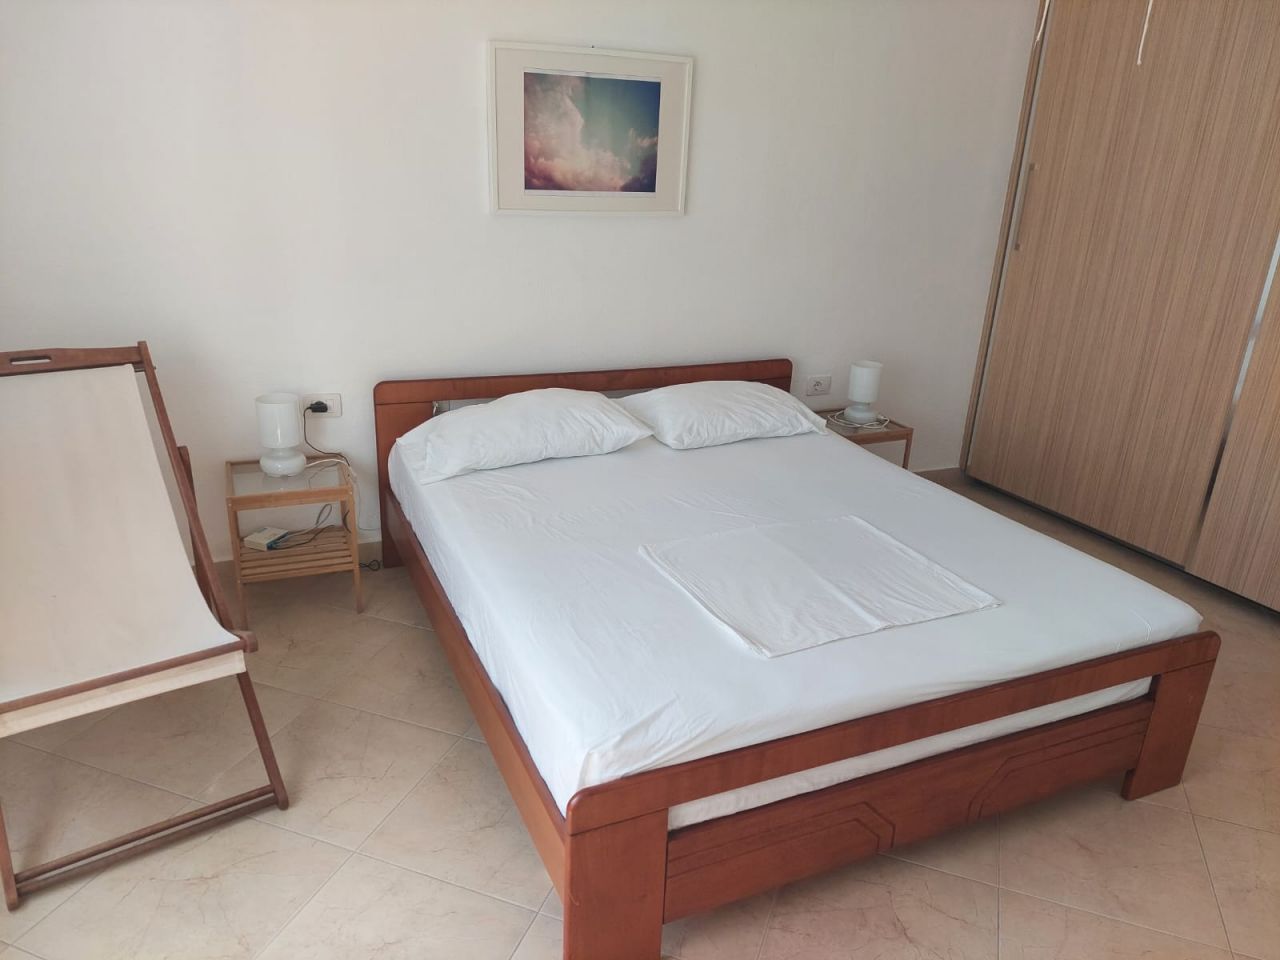 holiday apartment for rent in saranda, albania